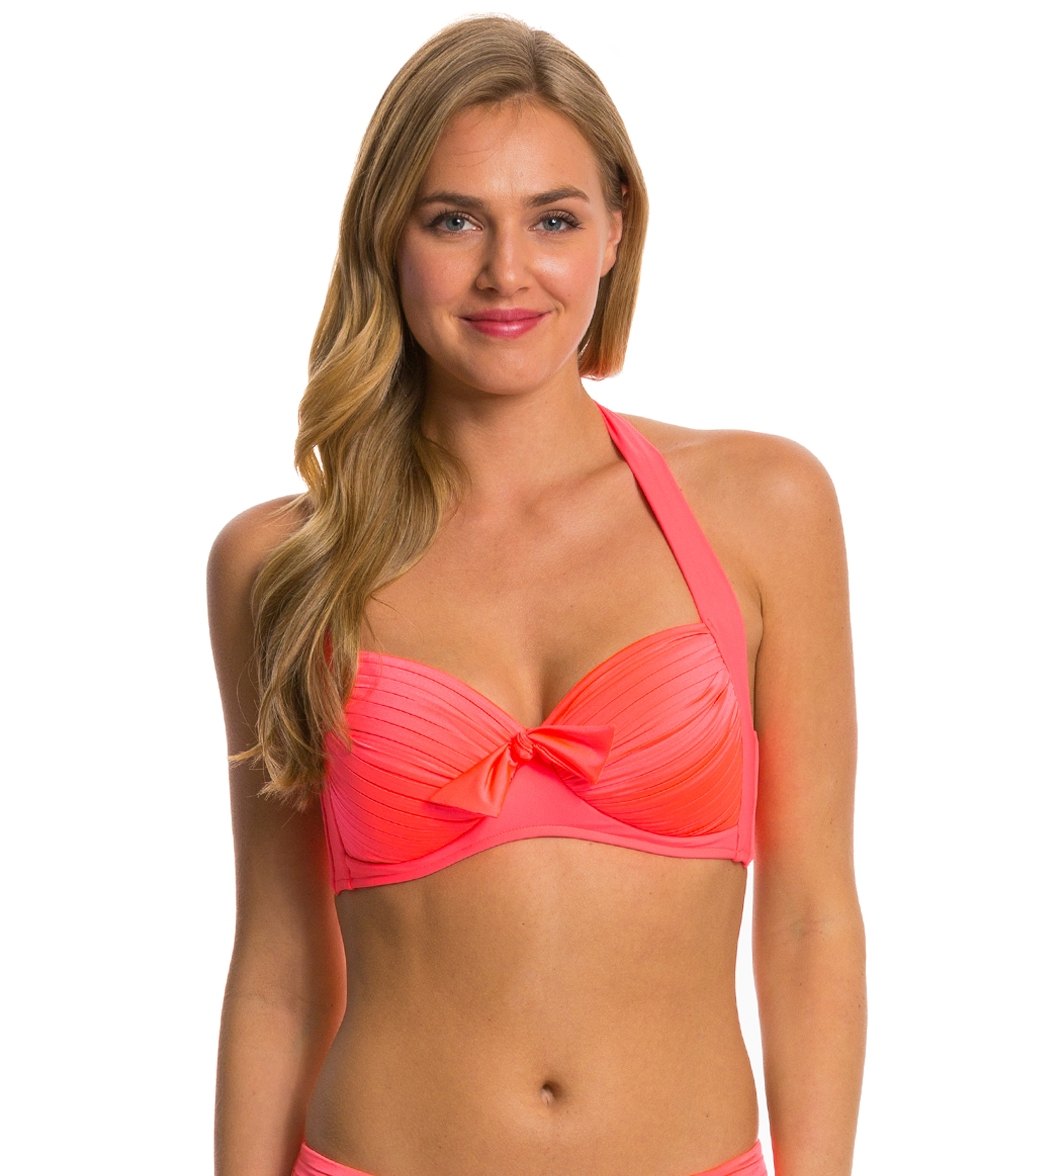 Seafolly Soft Cup Halter Bikini Top